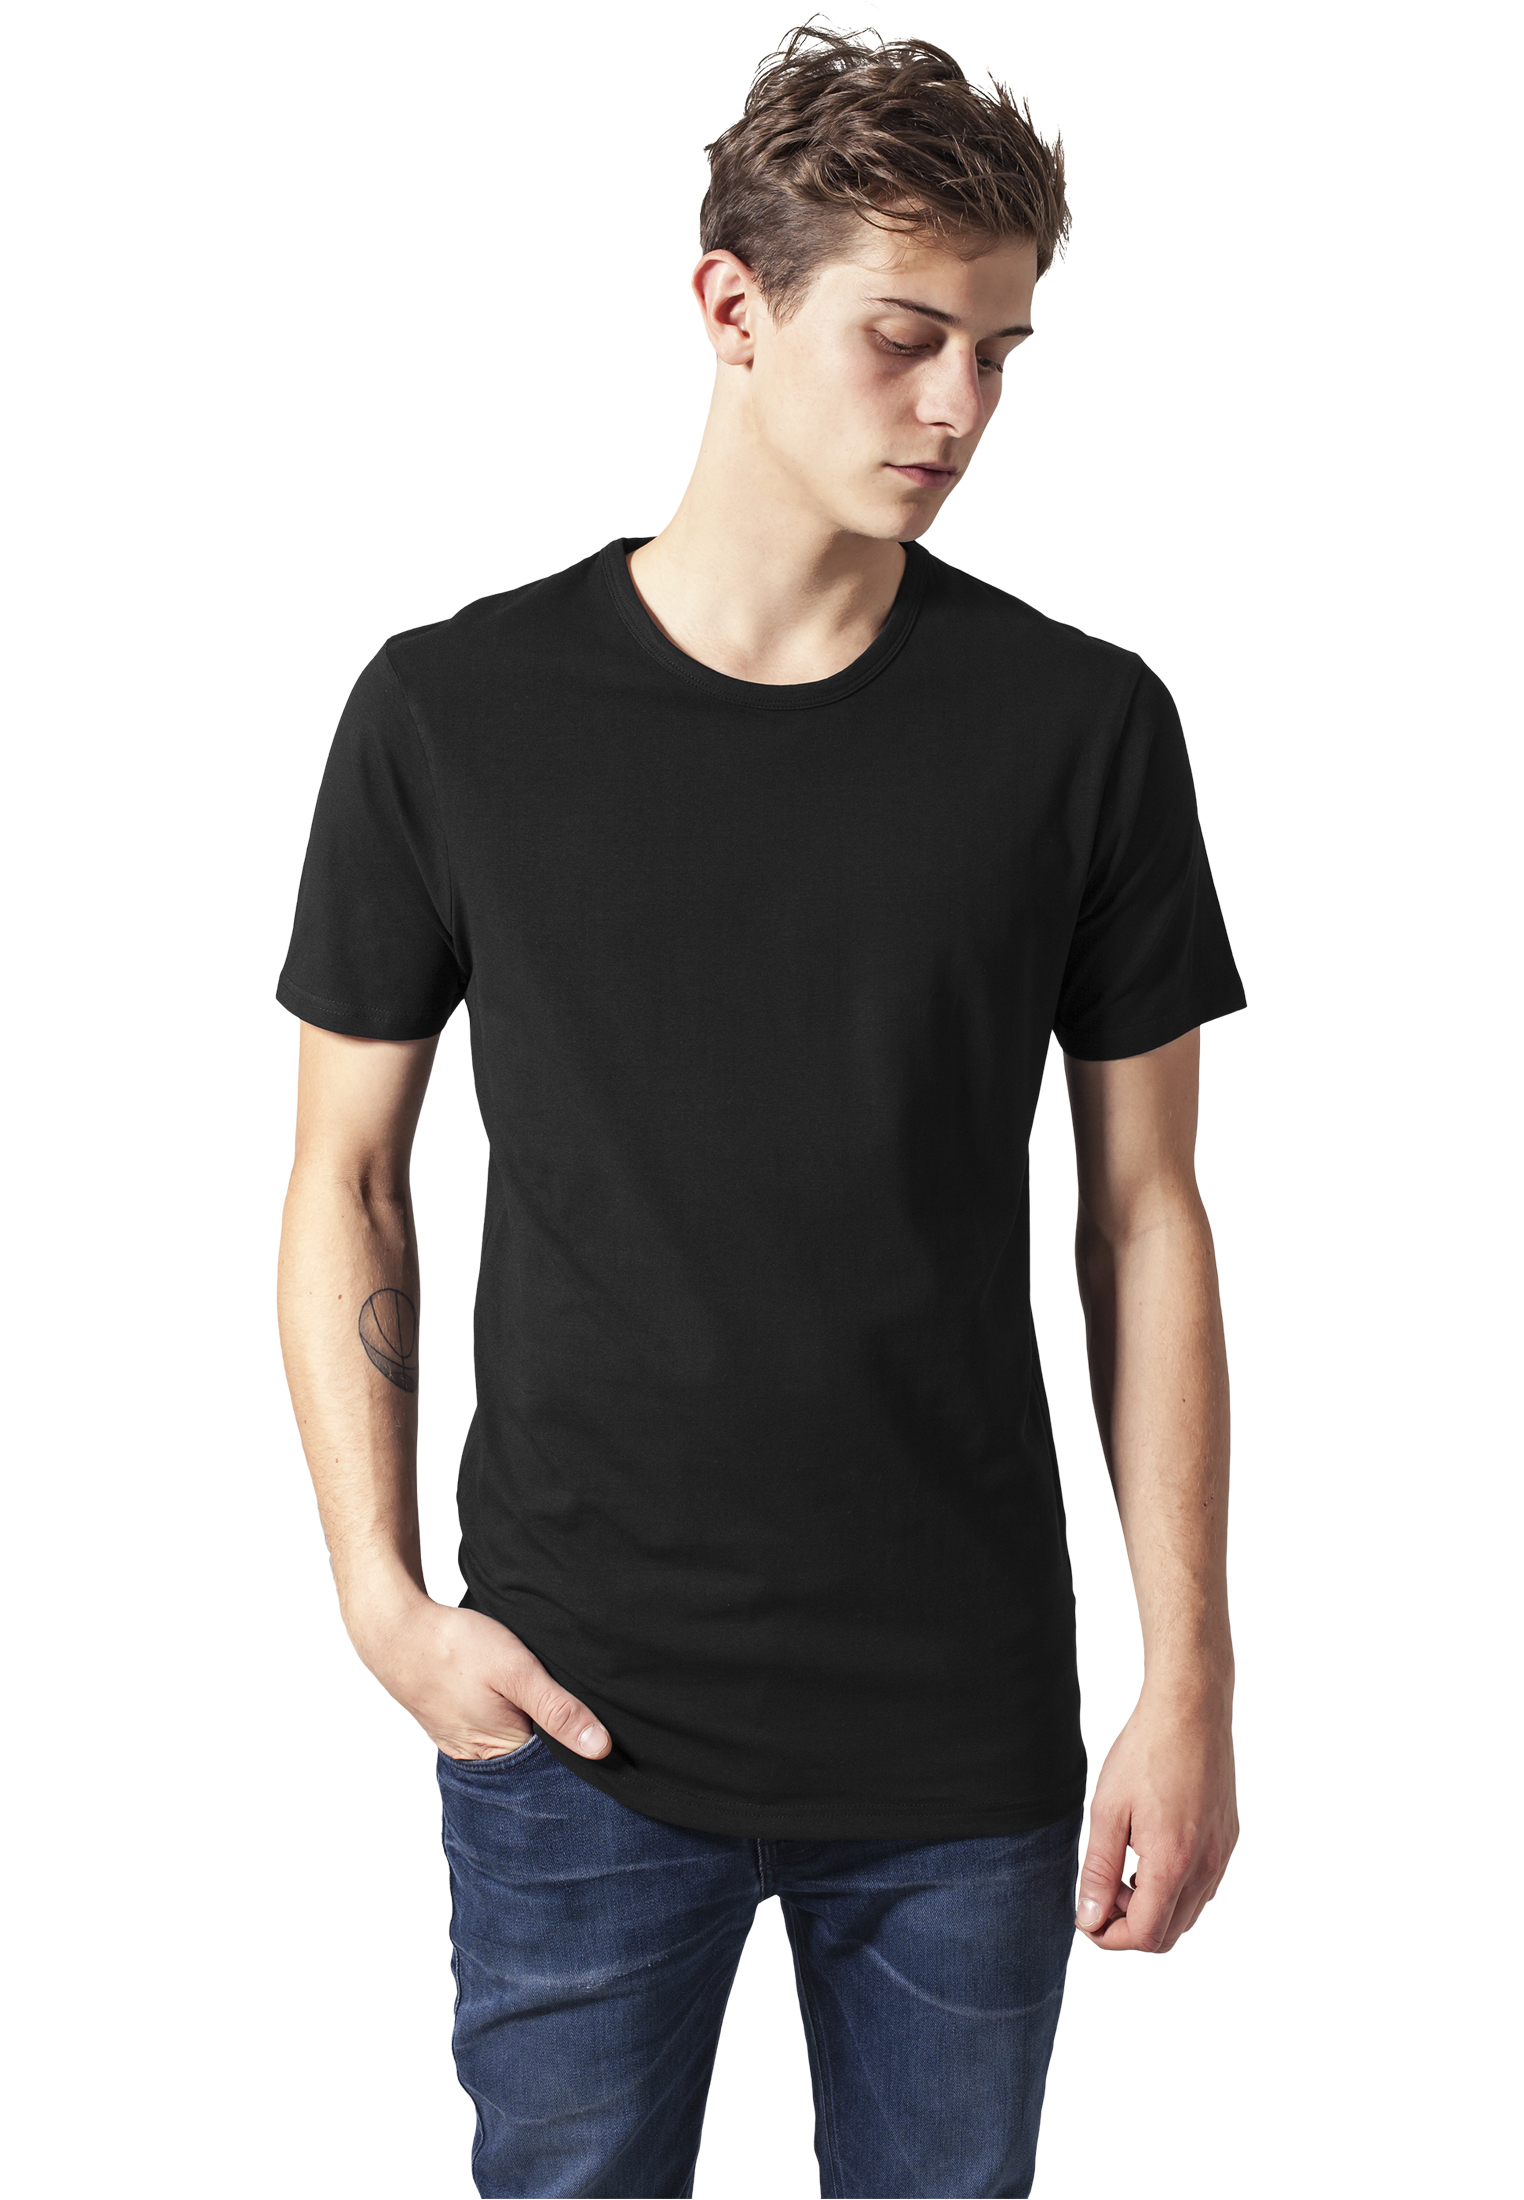 Buy Urban Classics 'Fitted Stretch' T-shirt - Black